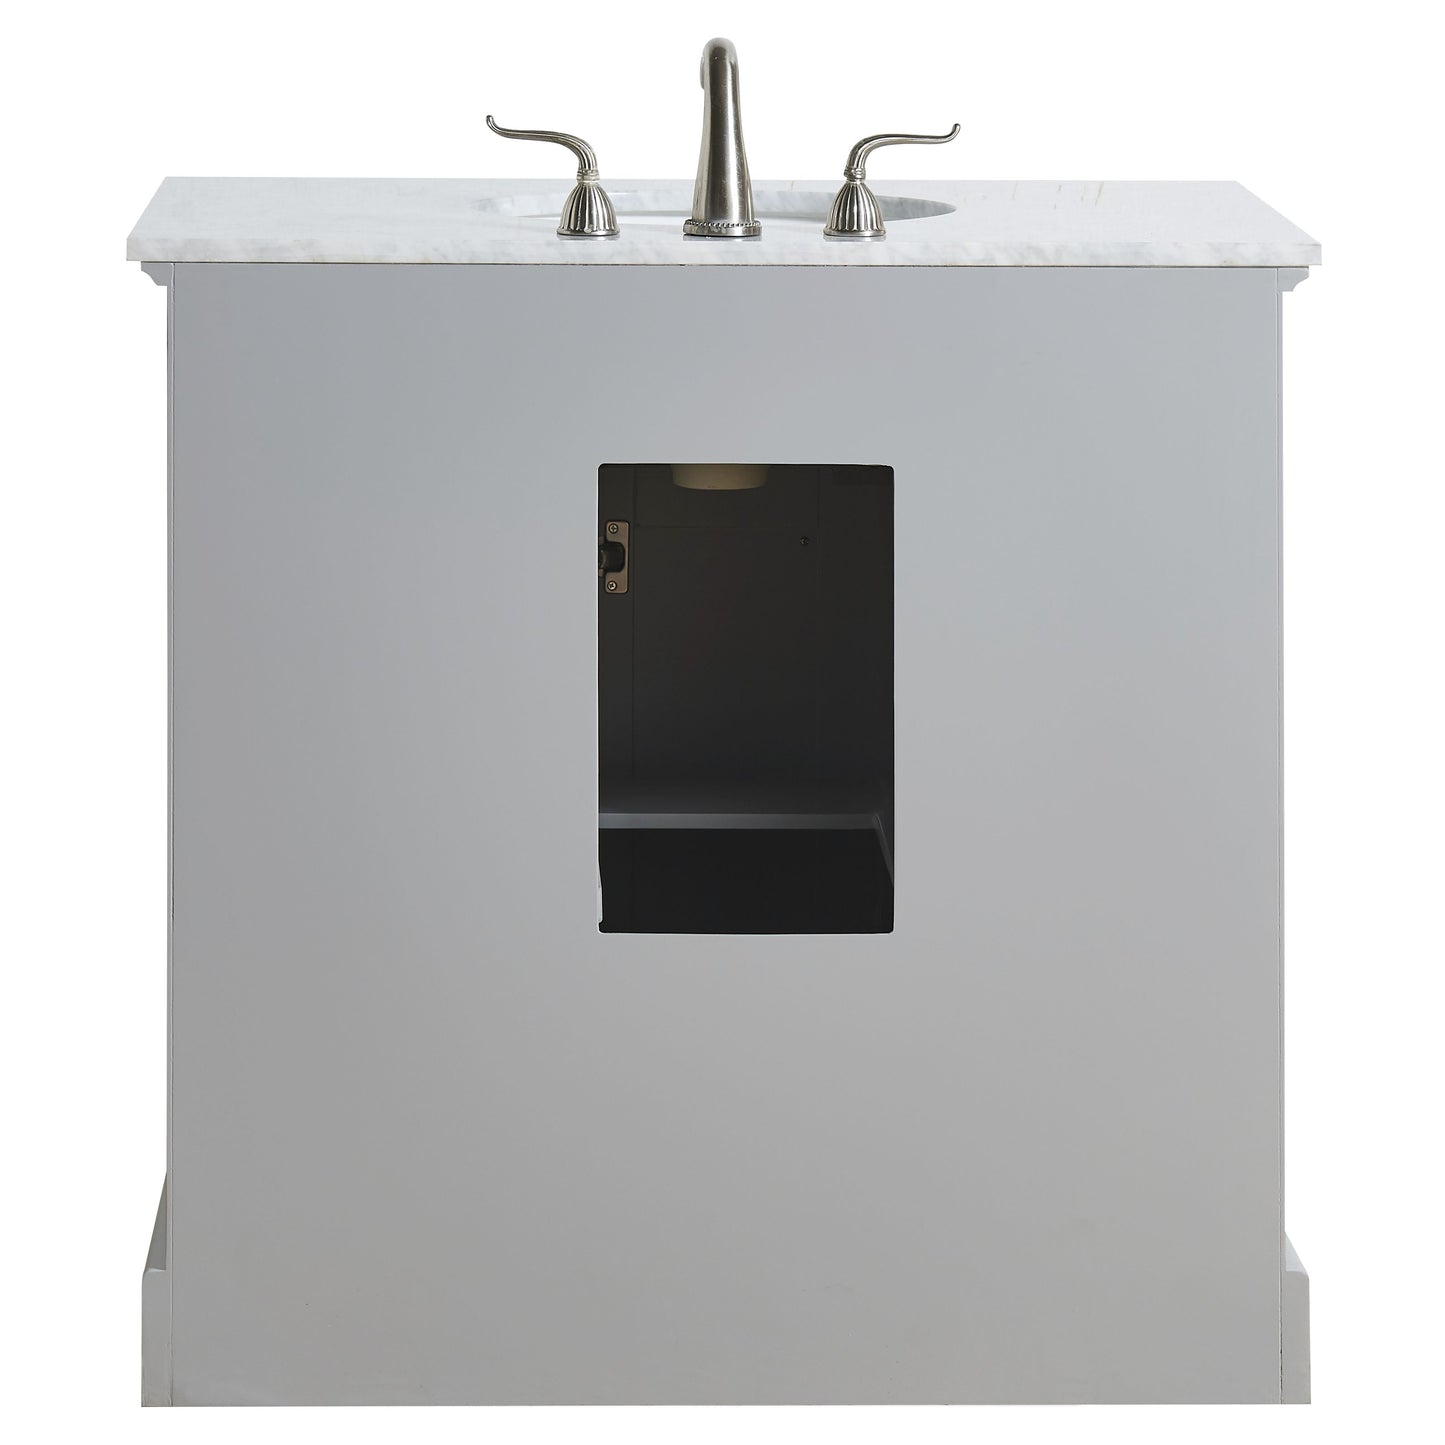 VF15036GR 36" Single Bathroom Vanity Set in Light Grey